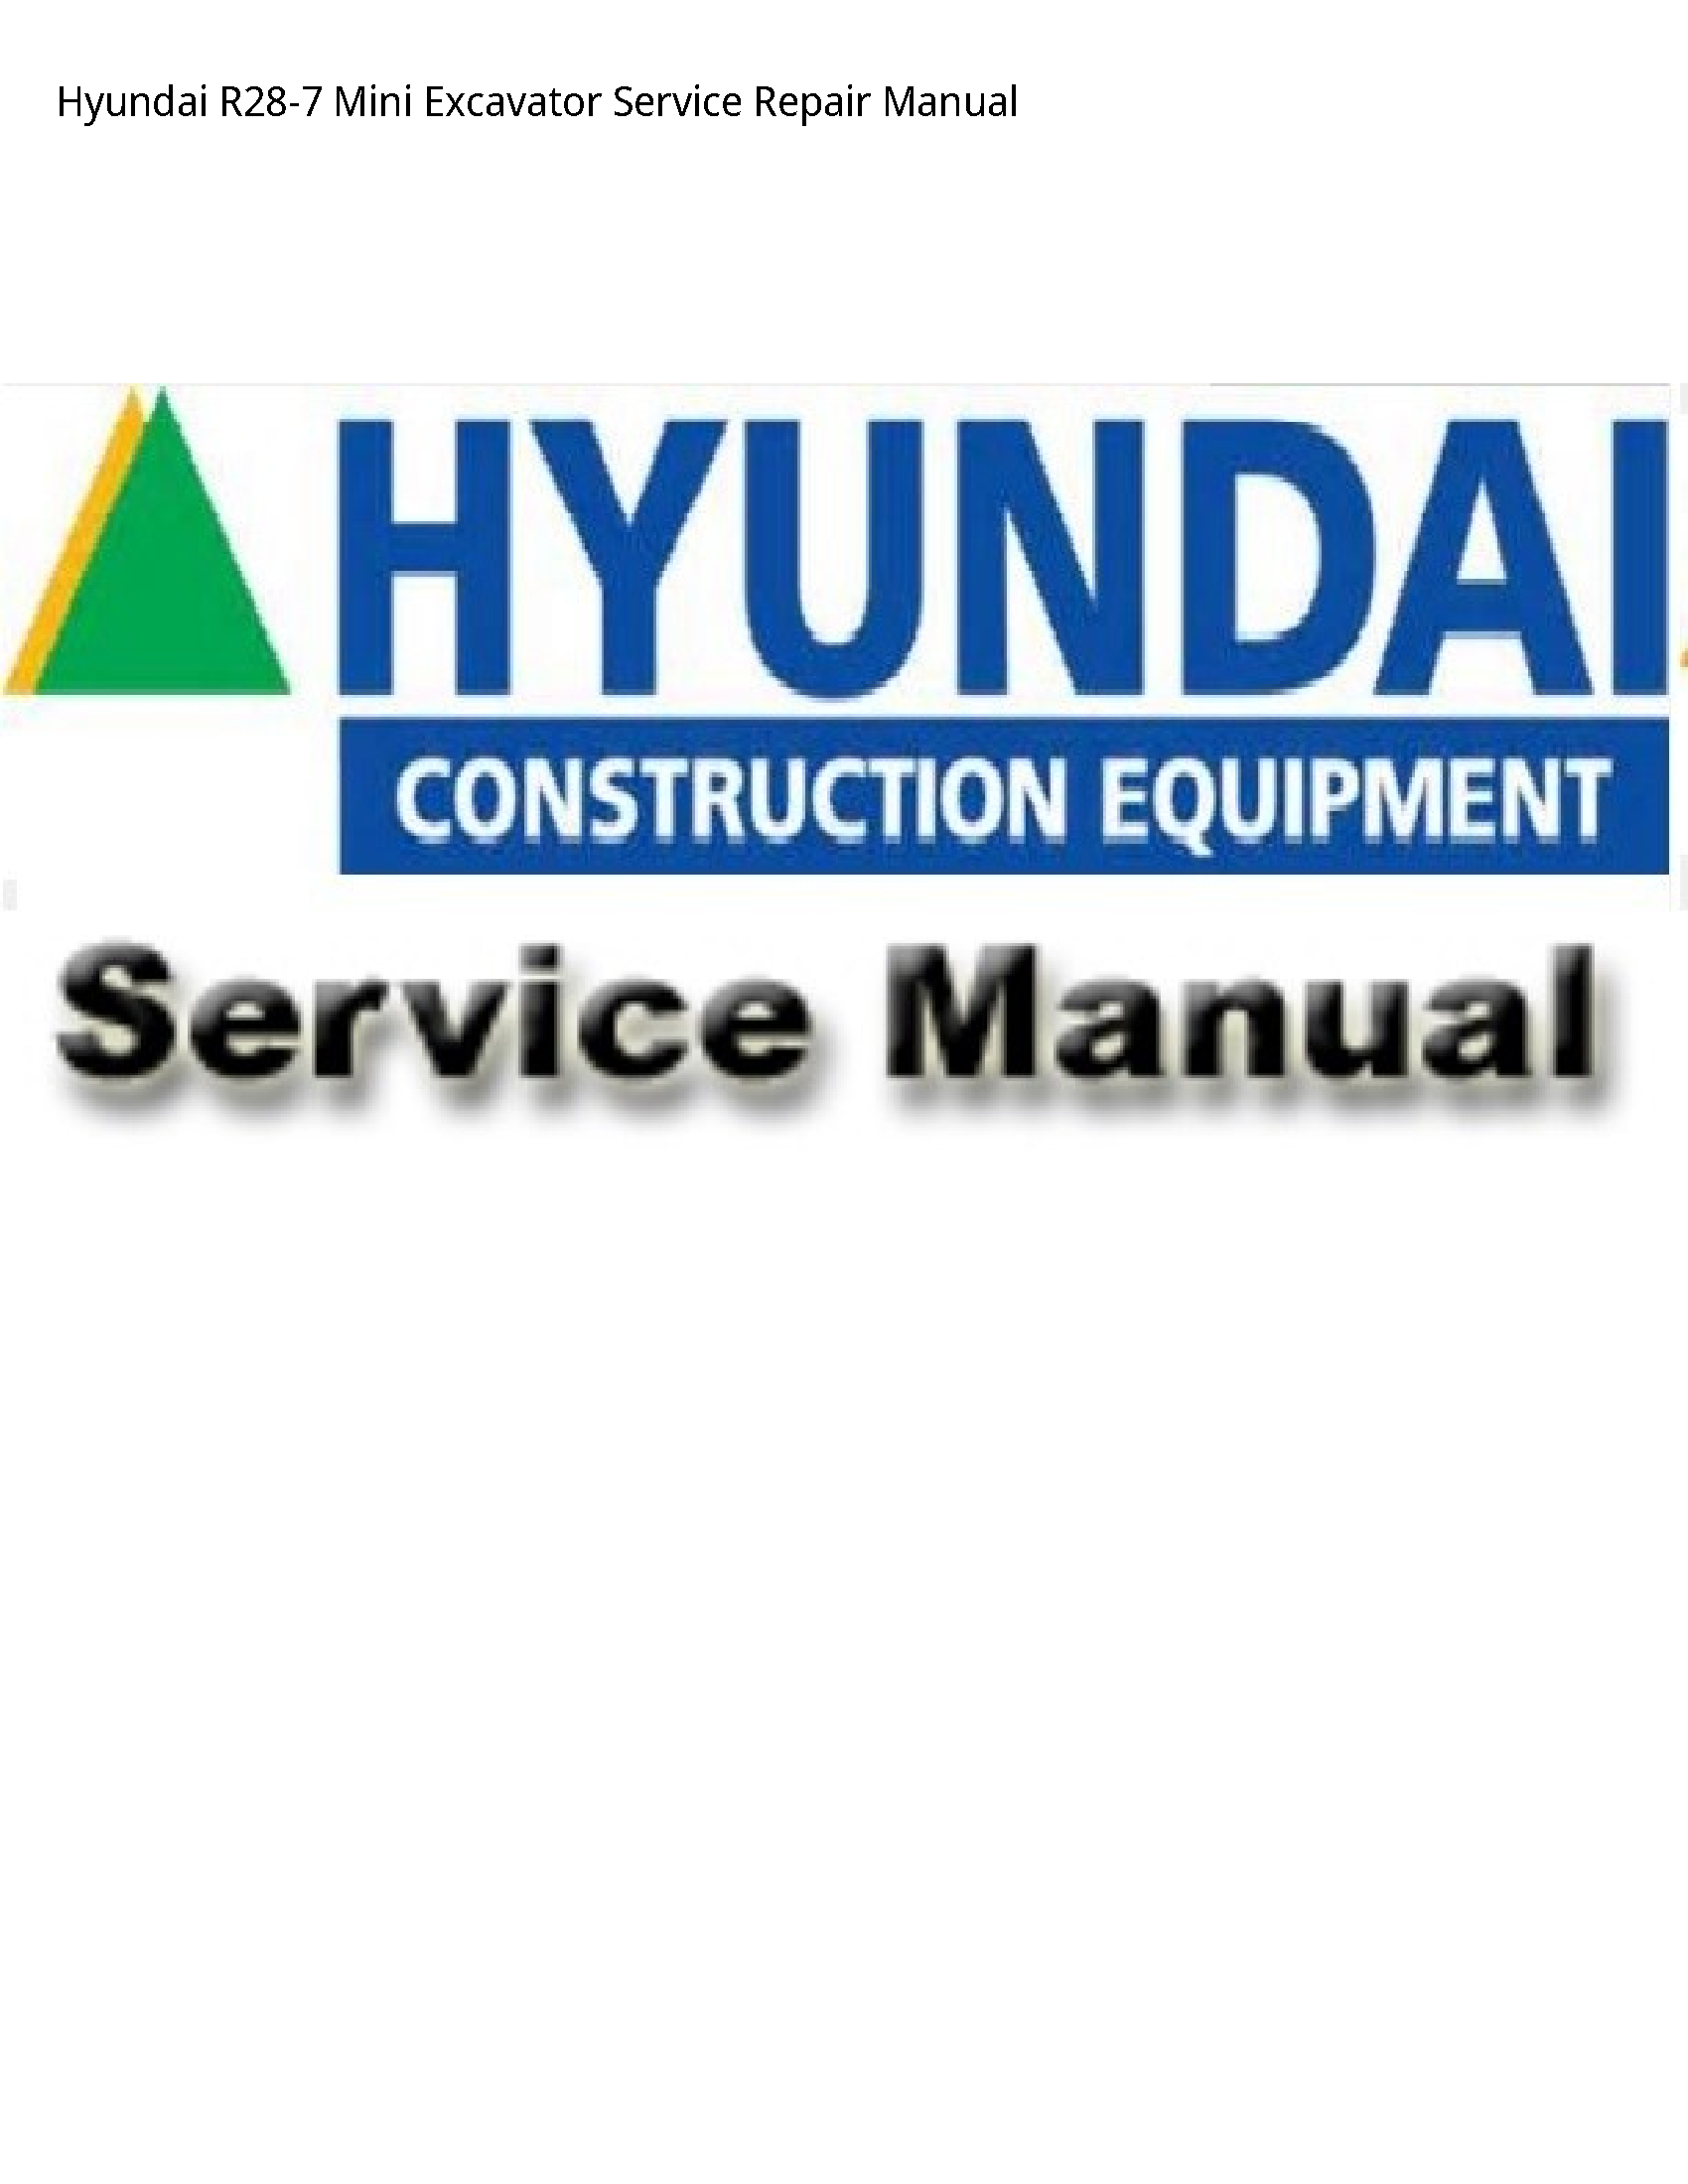 Hyundai R28-7 Mini Excavator manual